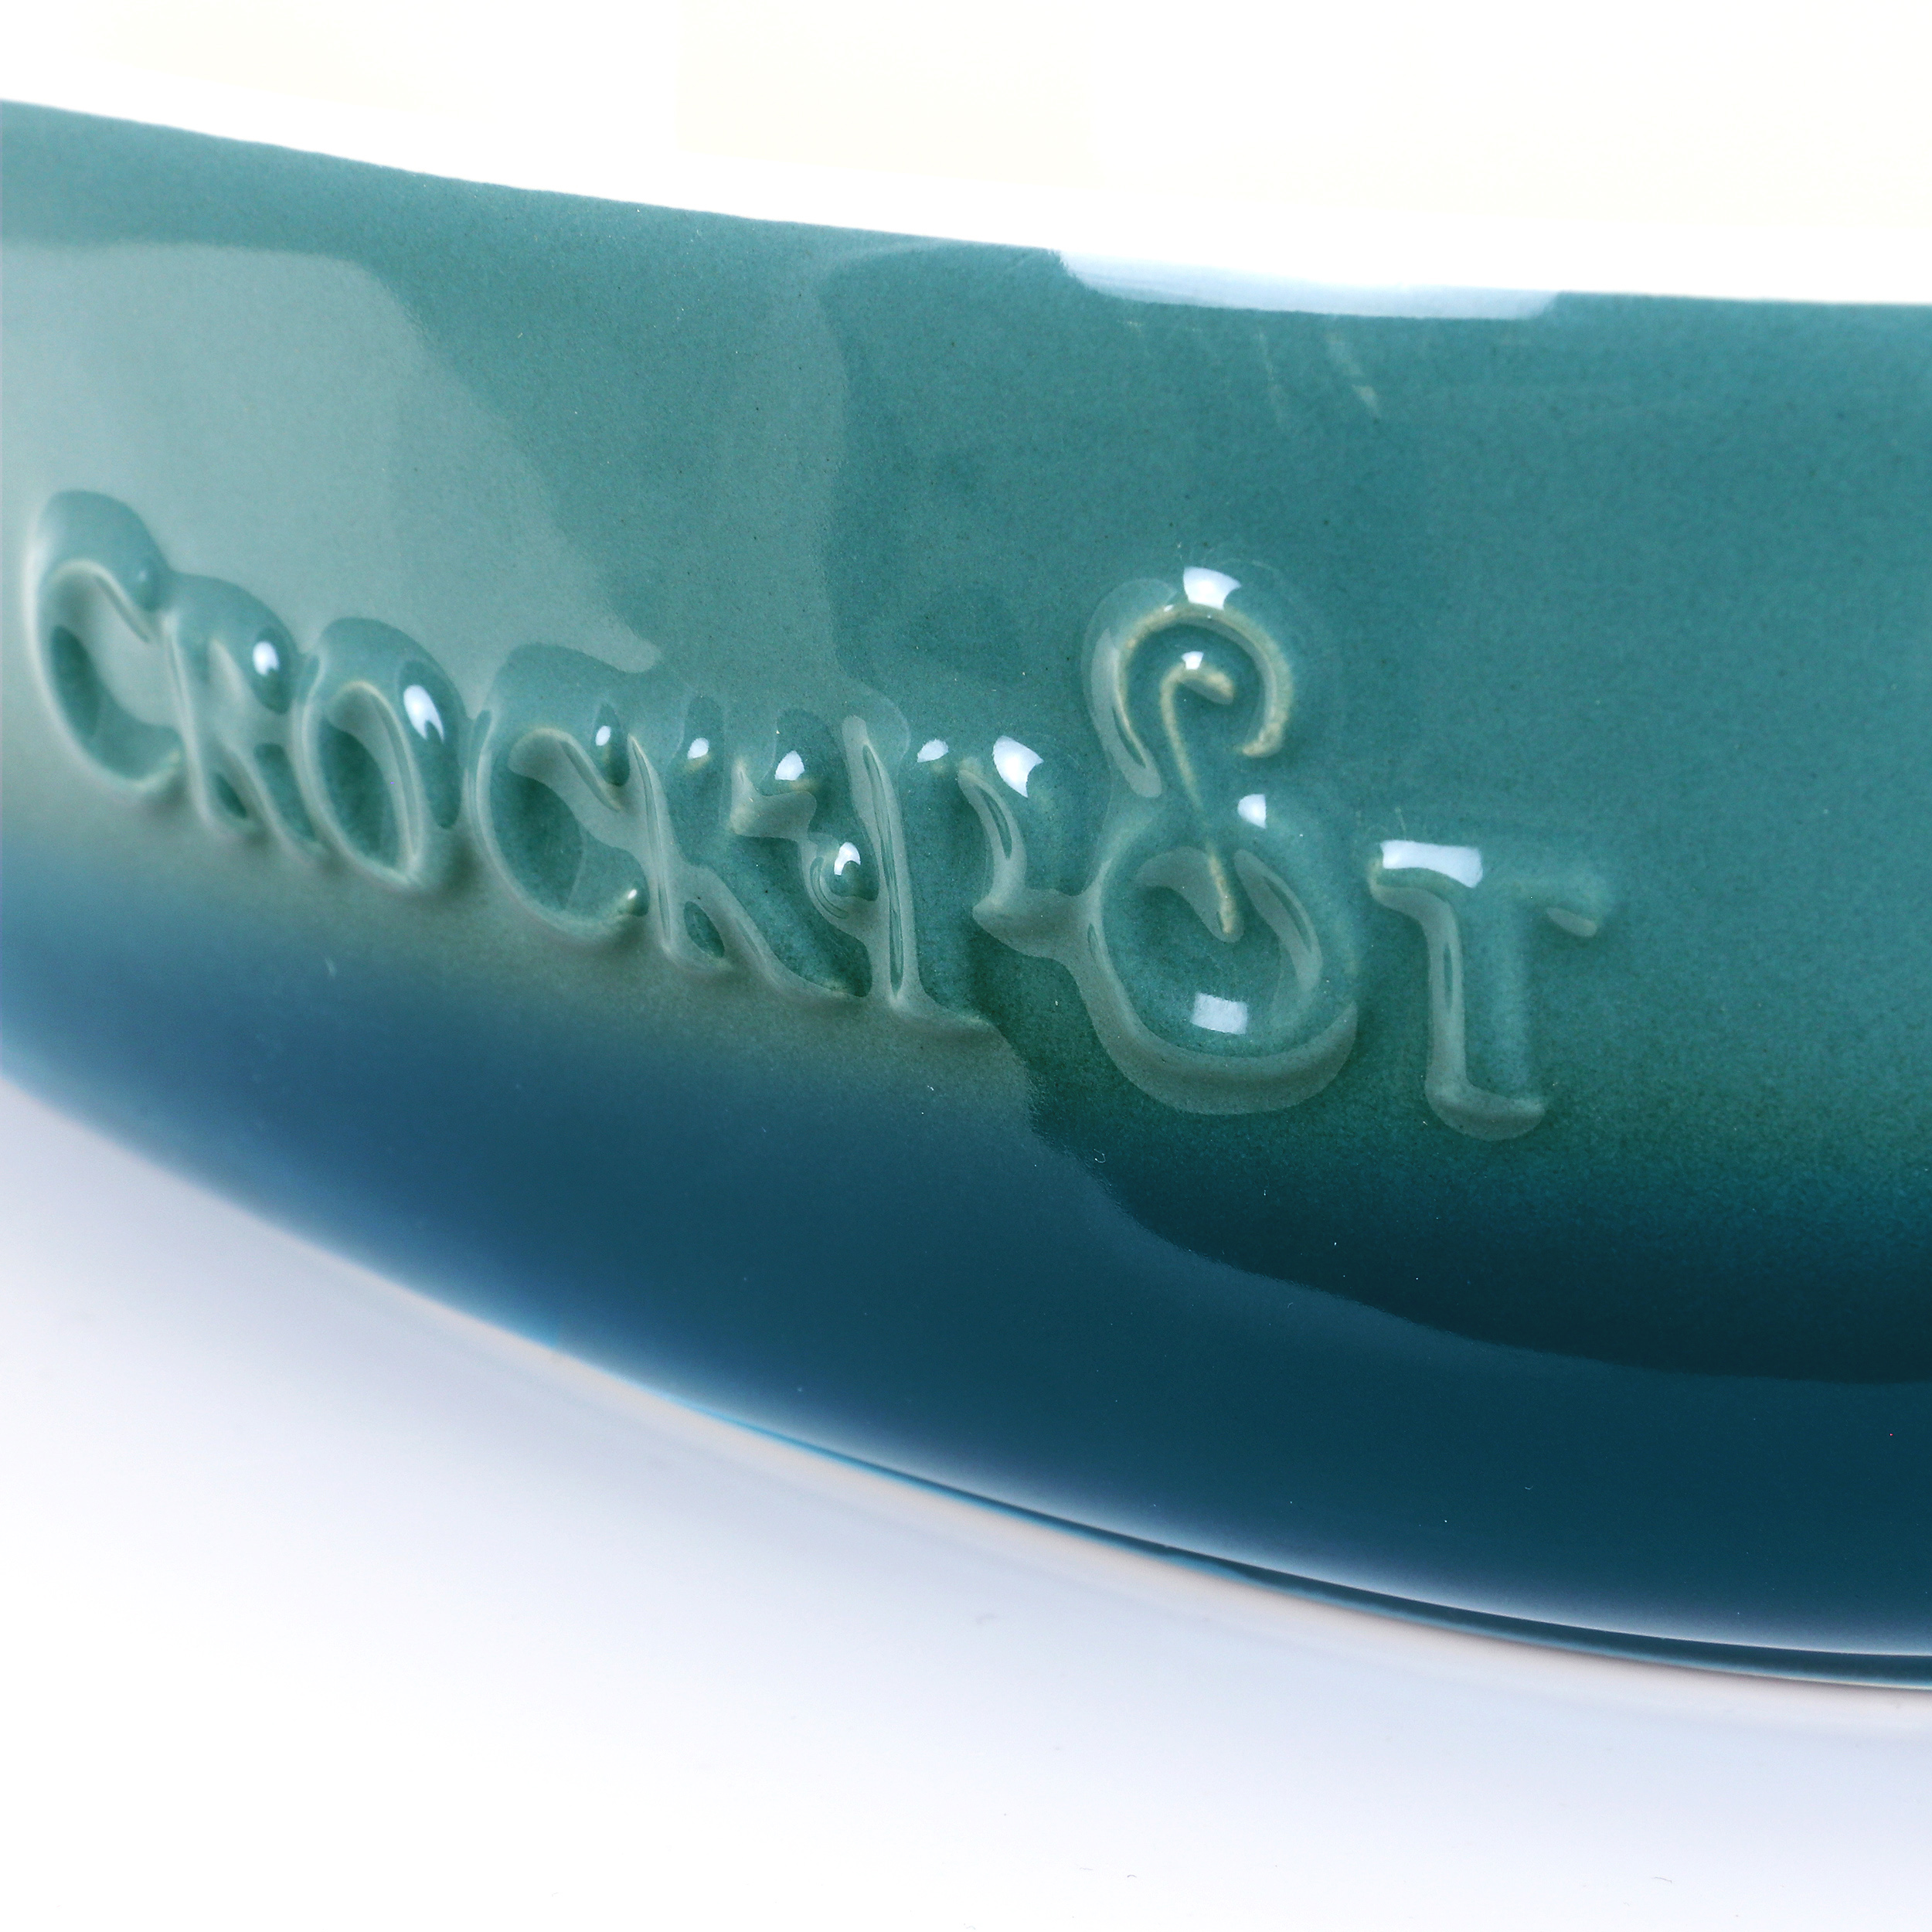 Crock-Pot Crock Pot Artisan 2.5 Quart Oval Stoneware Casserole with Lid in Gradient Teal